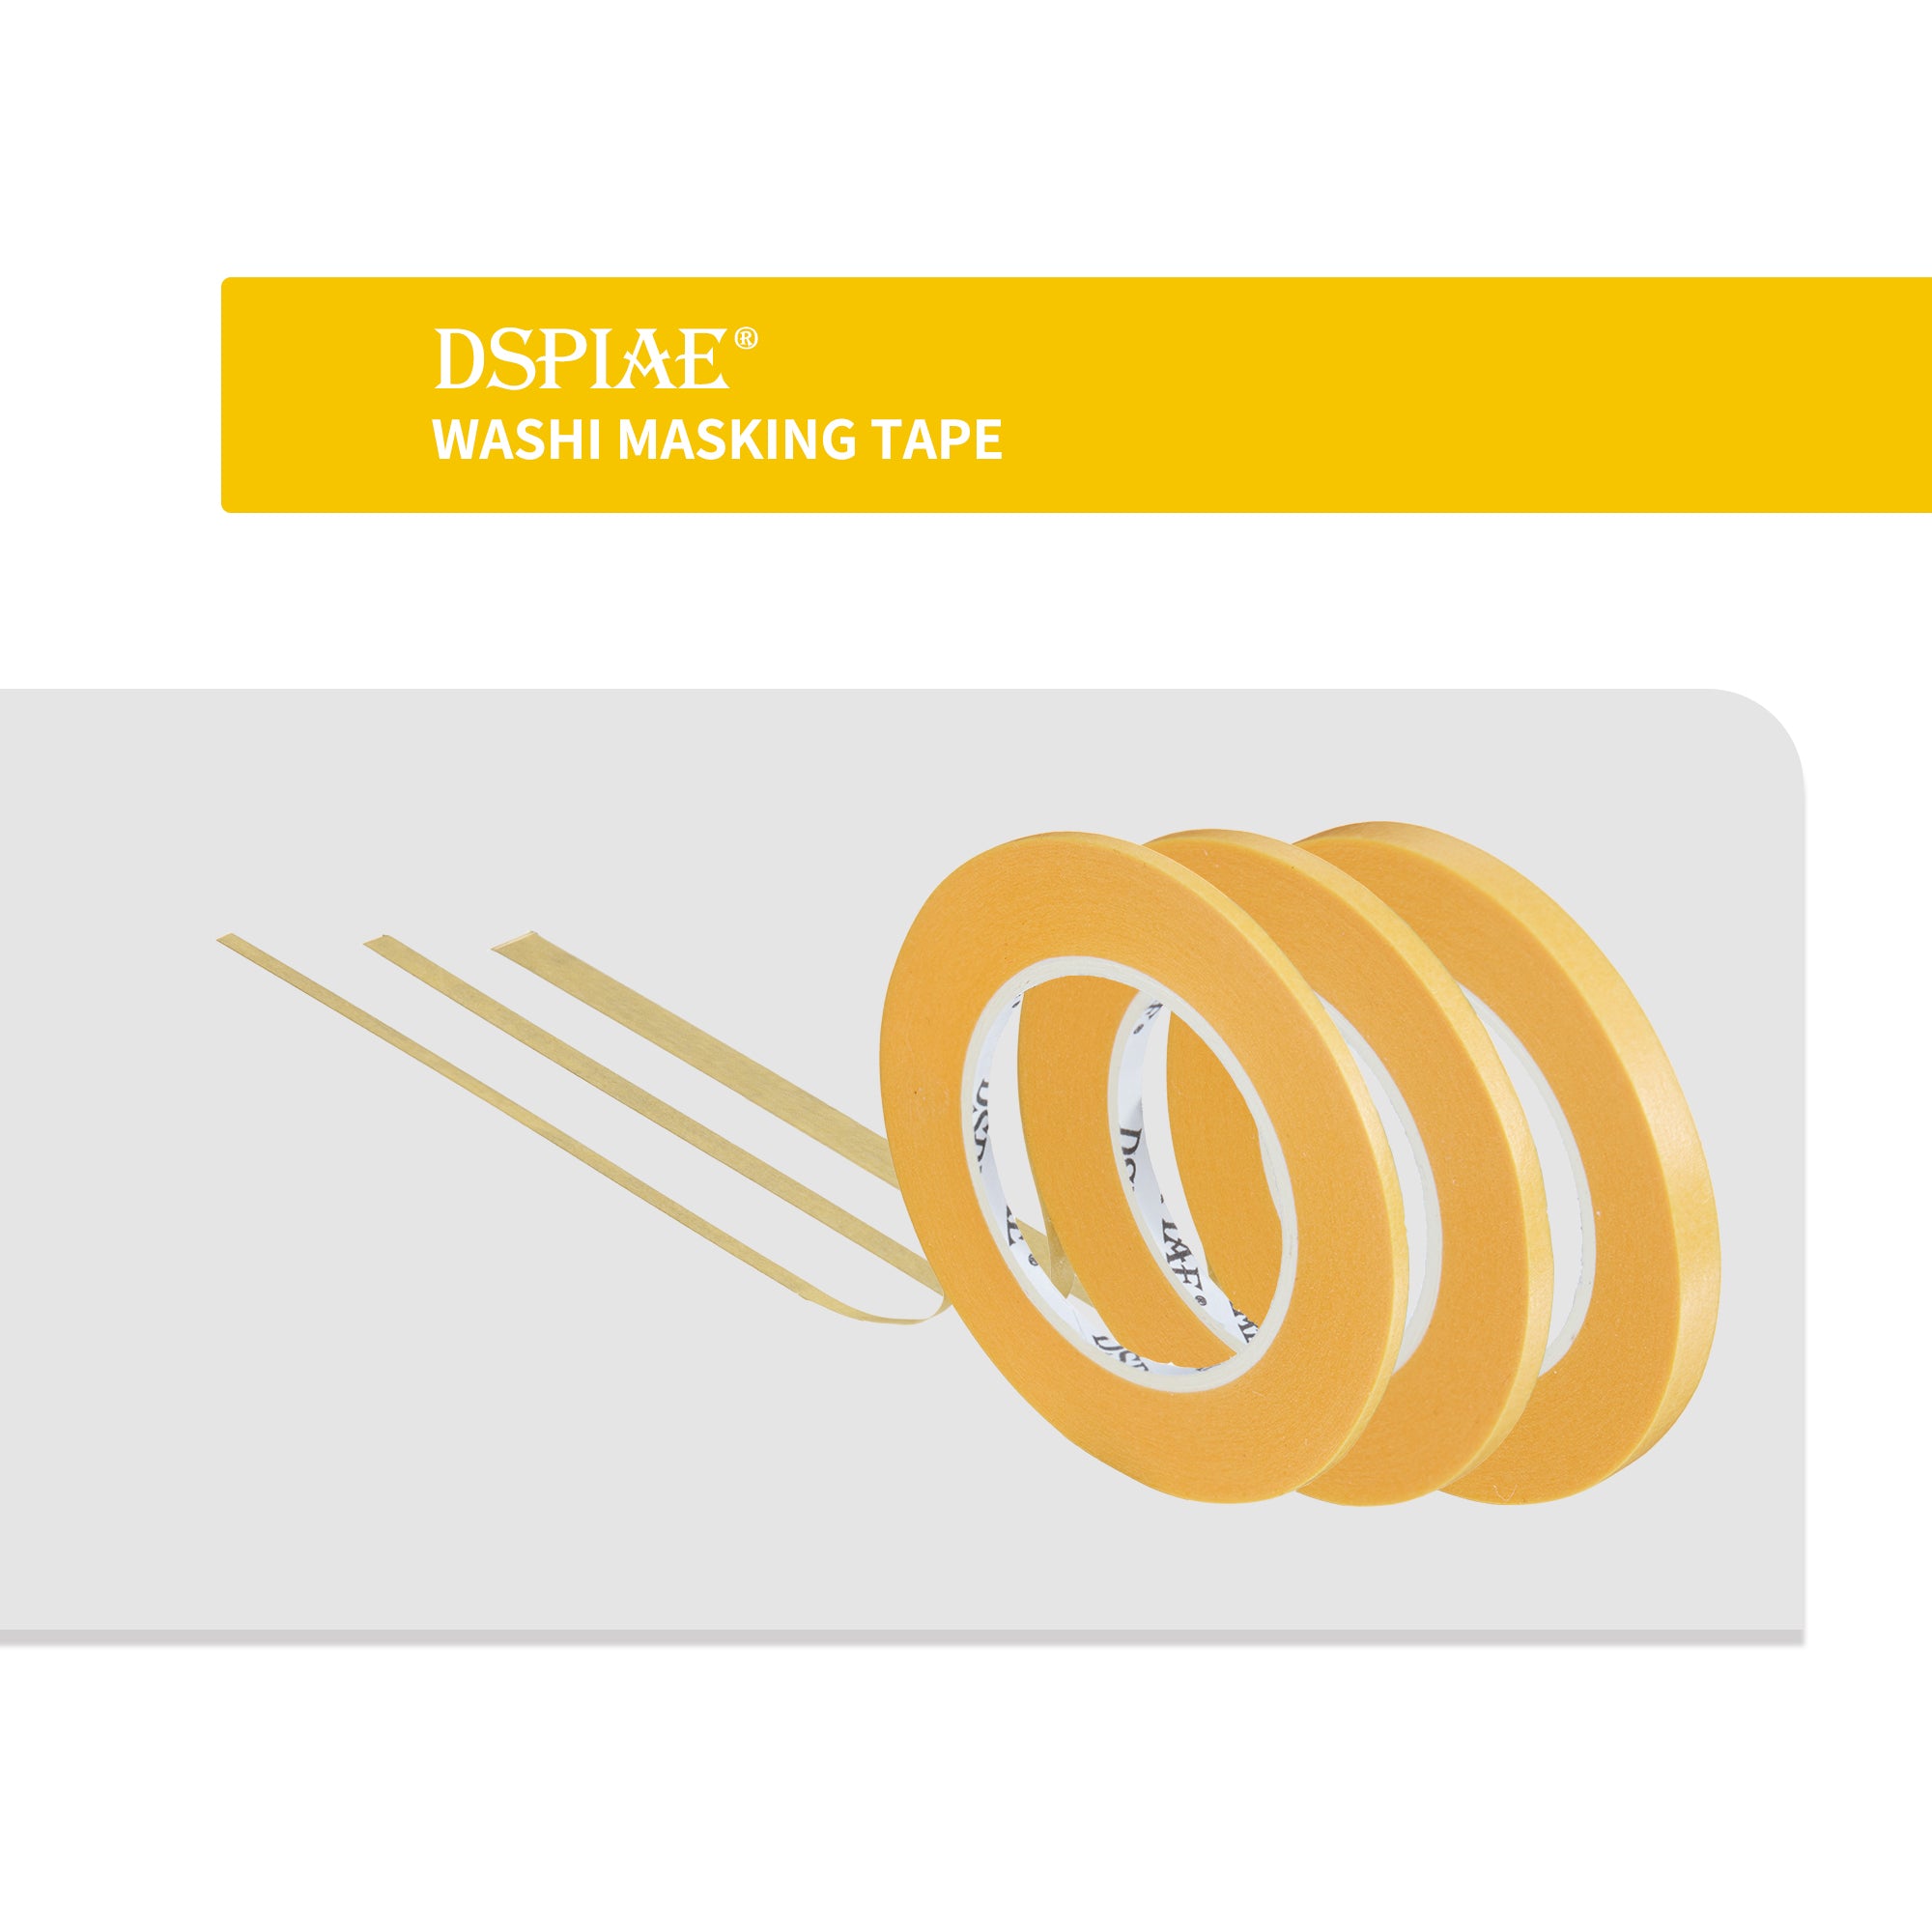 DSPIAE - Masking tape